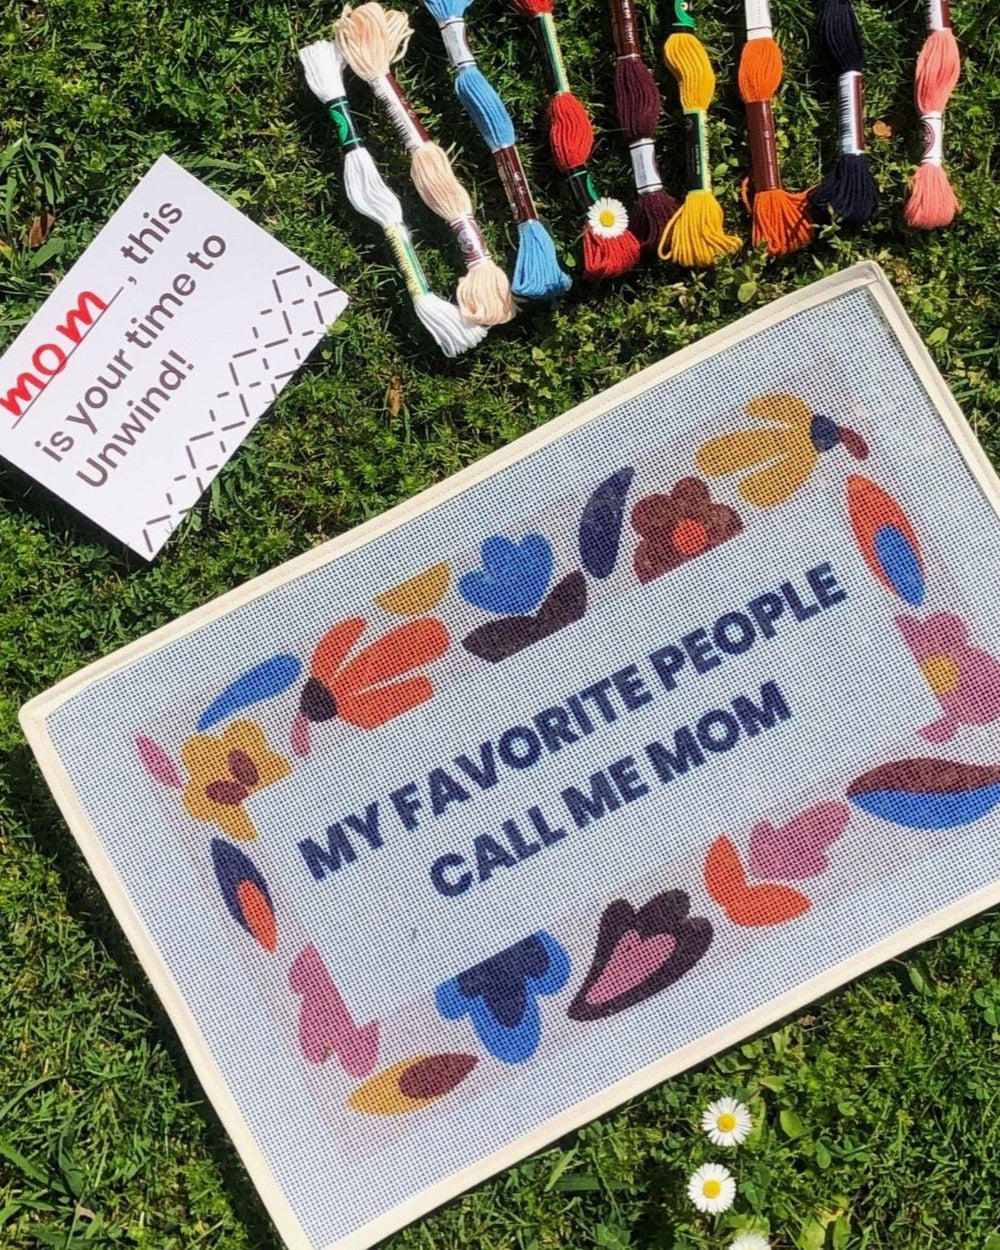 "My Favorite People call me Mom" Needlepoint Cushion Kit by Unwind Studio